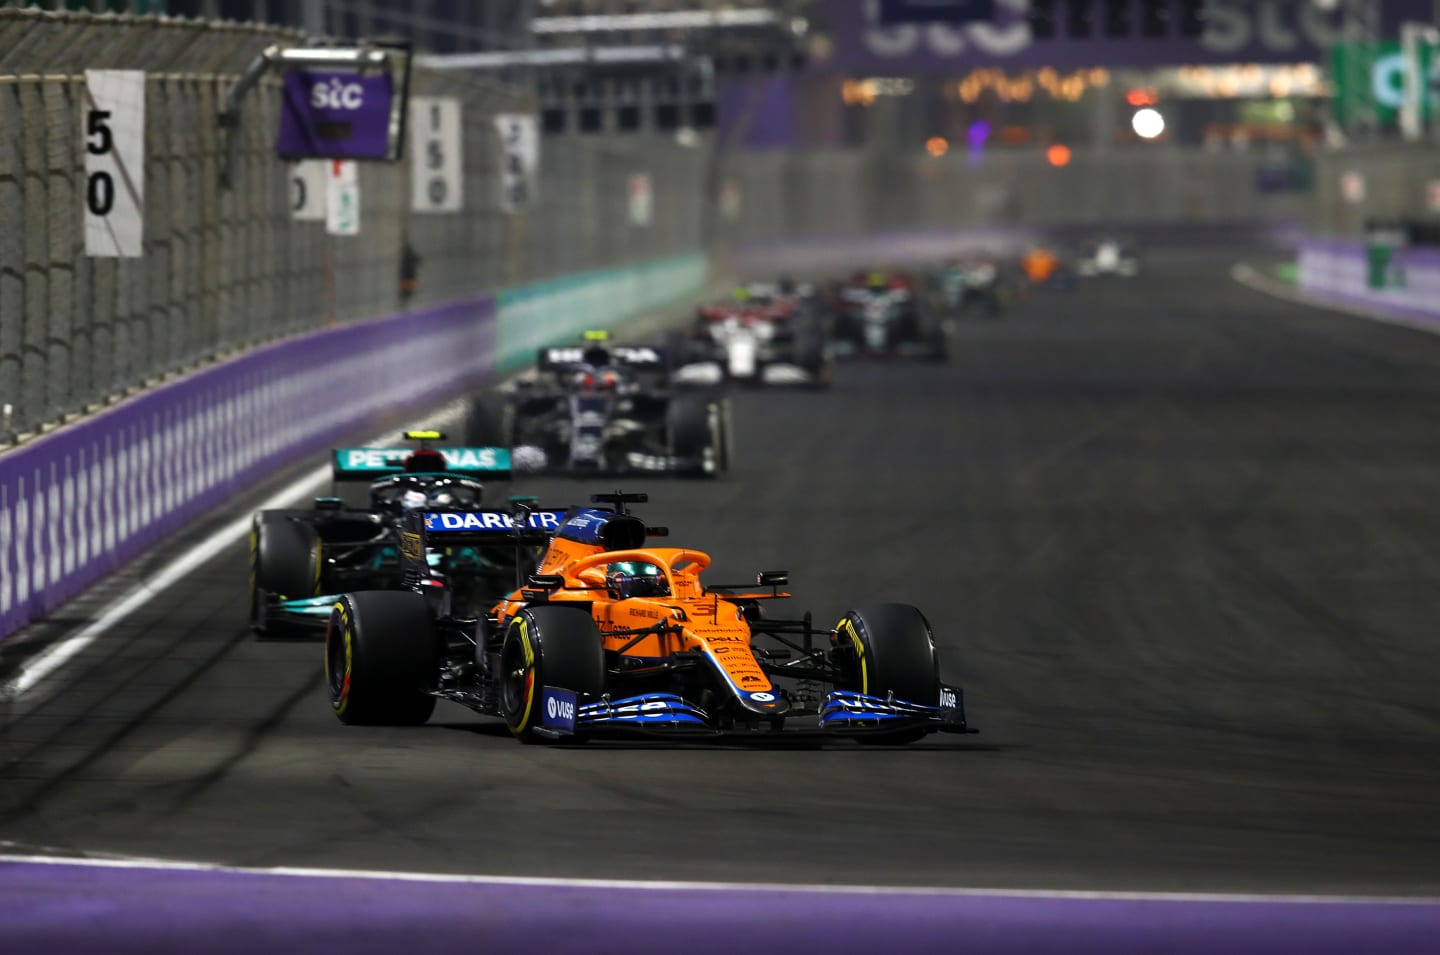 JEDDAH, SAUDI ARABIA - DECEMBER 05: Daniel Ricciardo of Australia driving the (3) McLaren F1 Team